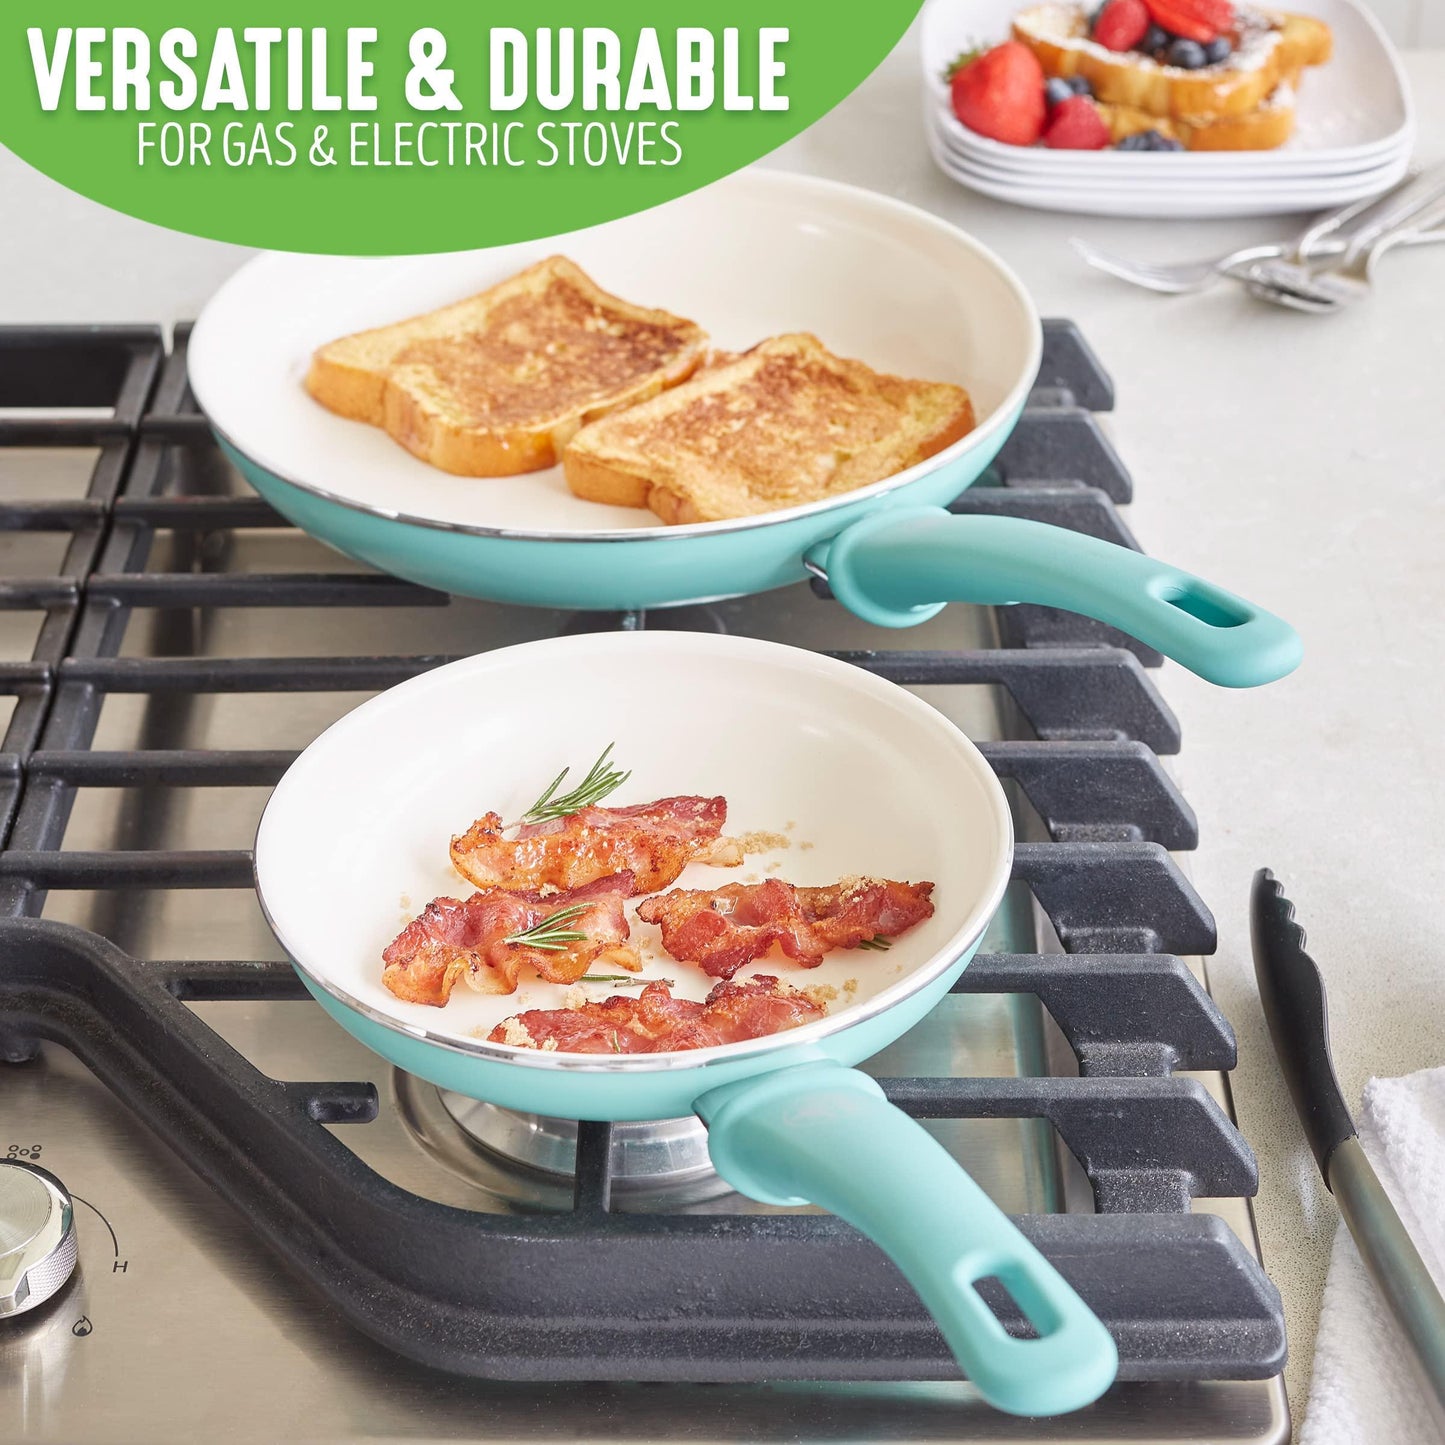 GreenLife Soft Grip Healthy Ceramic Nonstick 7" and 10" Frying Egg Omeltte Pan Skillet Set, PFAS-Free, Dishwasher Safe, Turquoise - CookCave